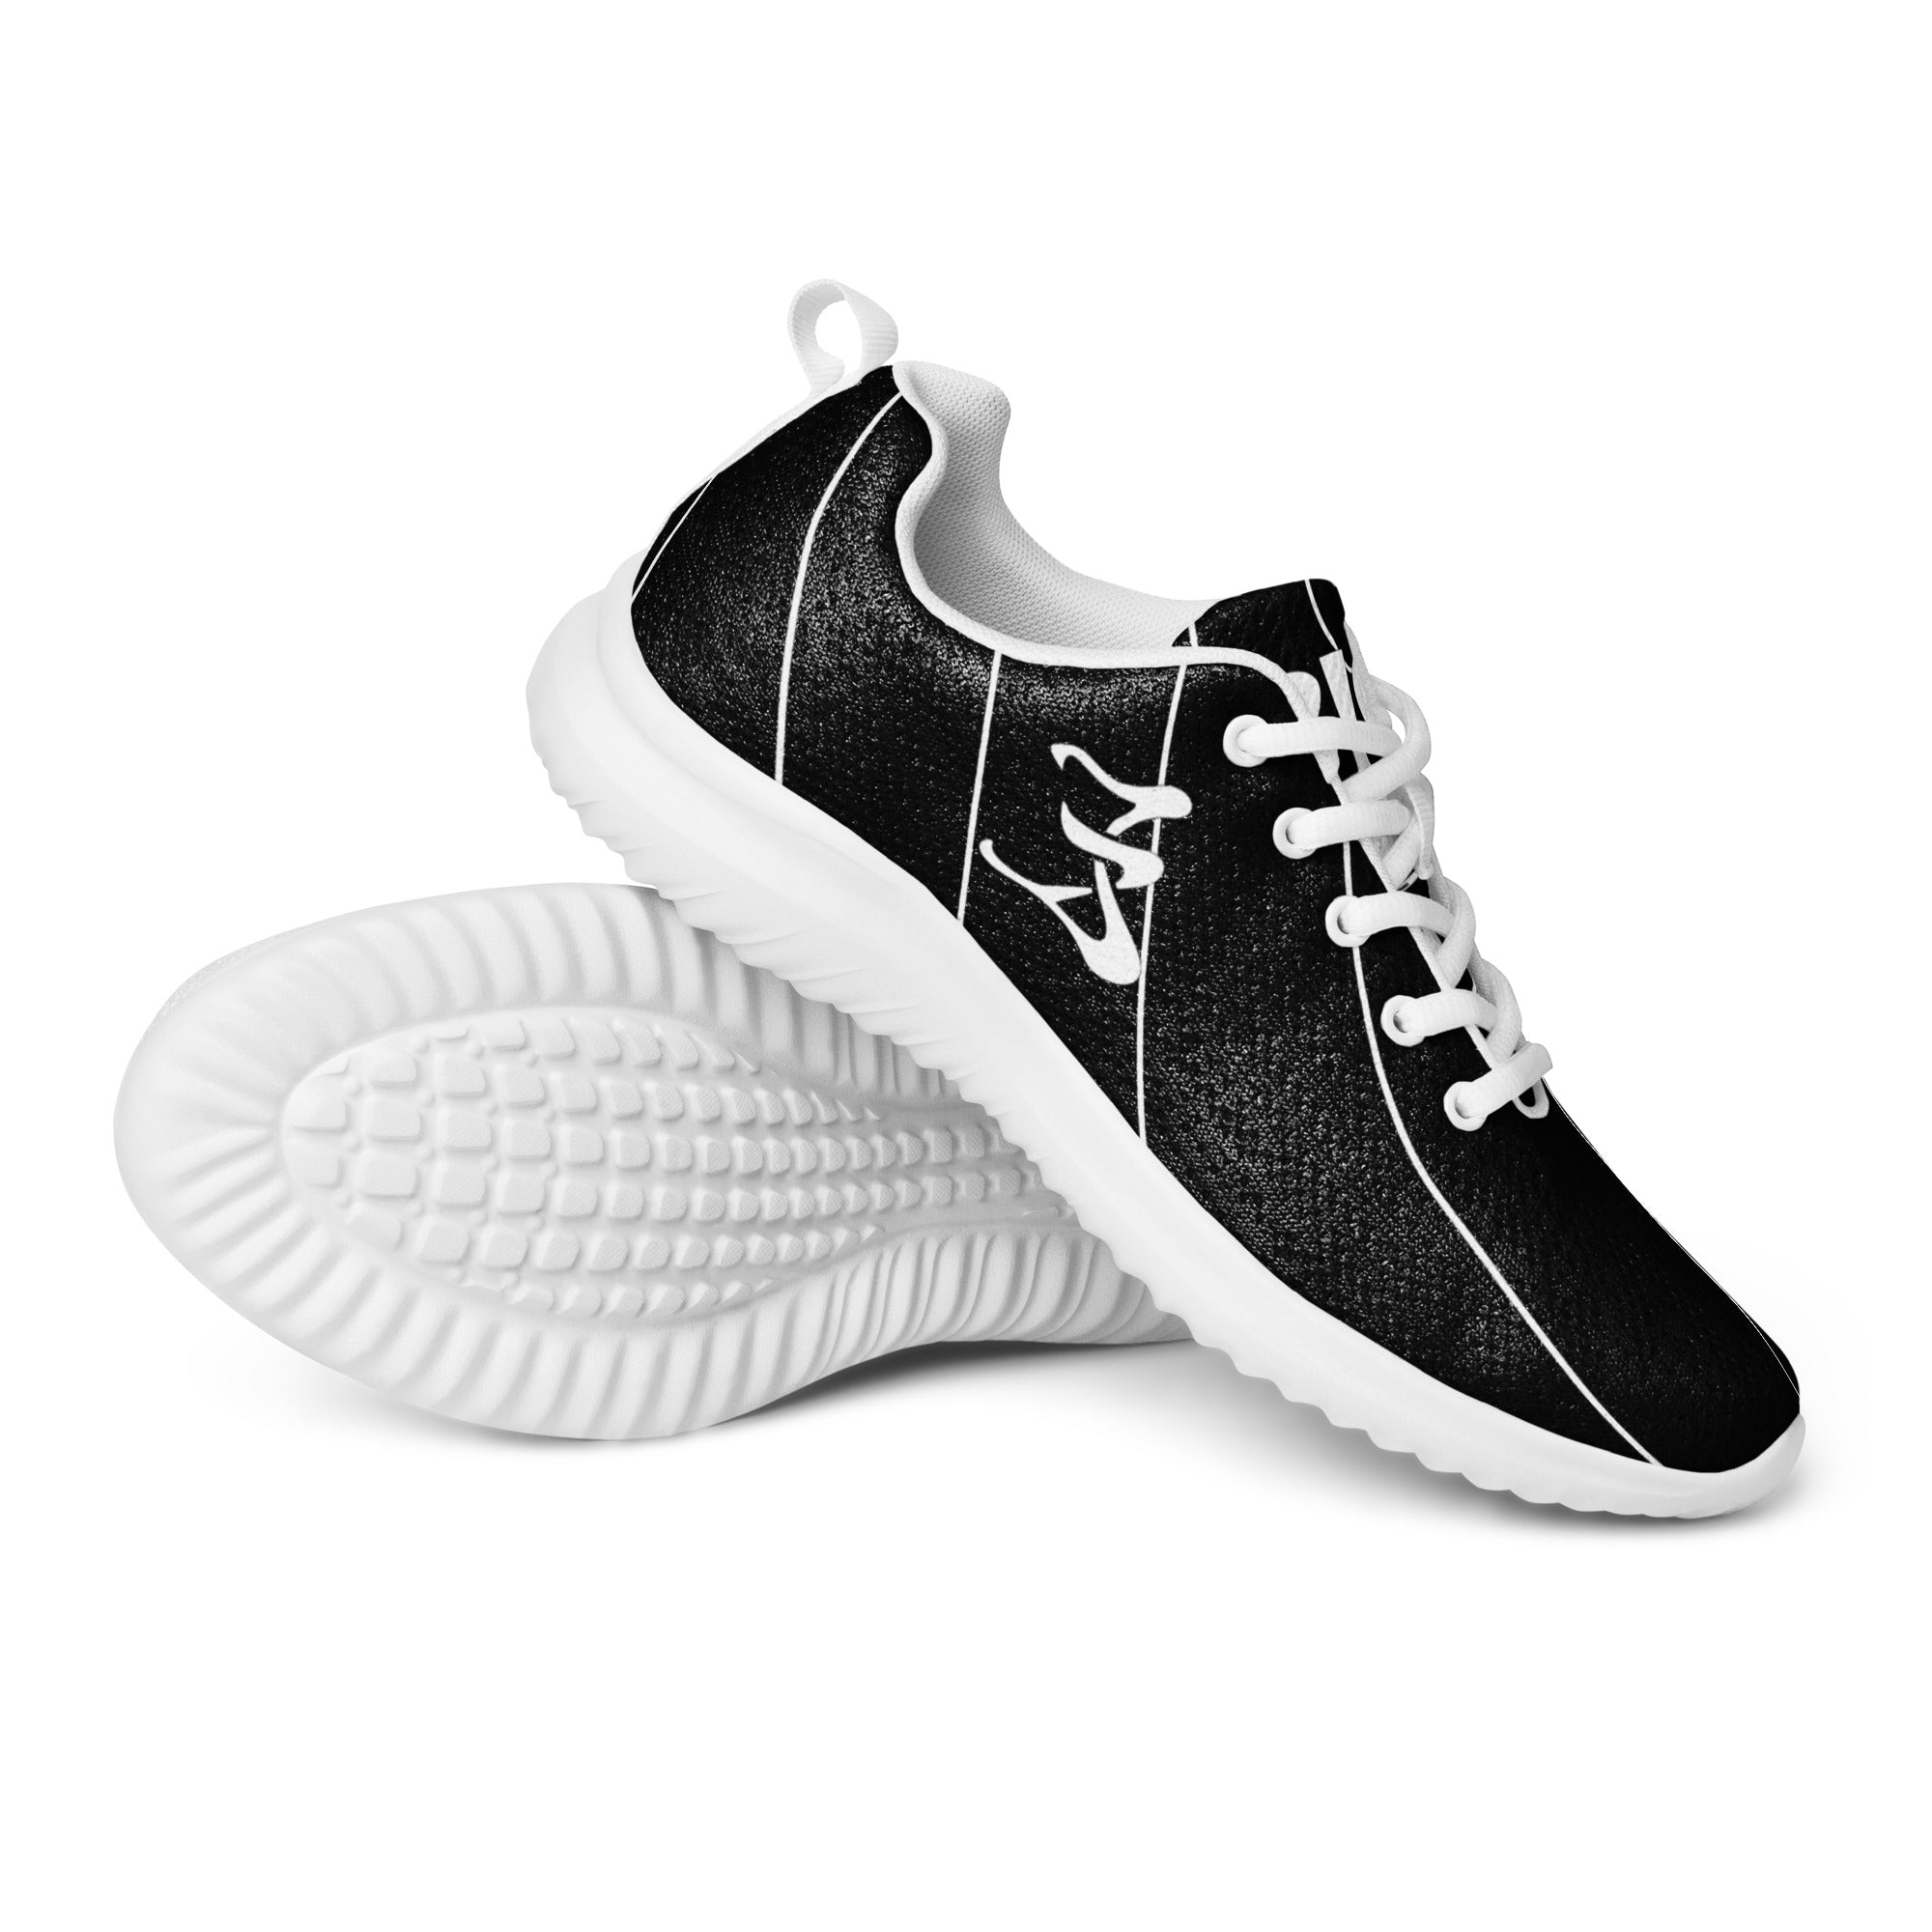 Men’s athletic walking shoes black